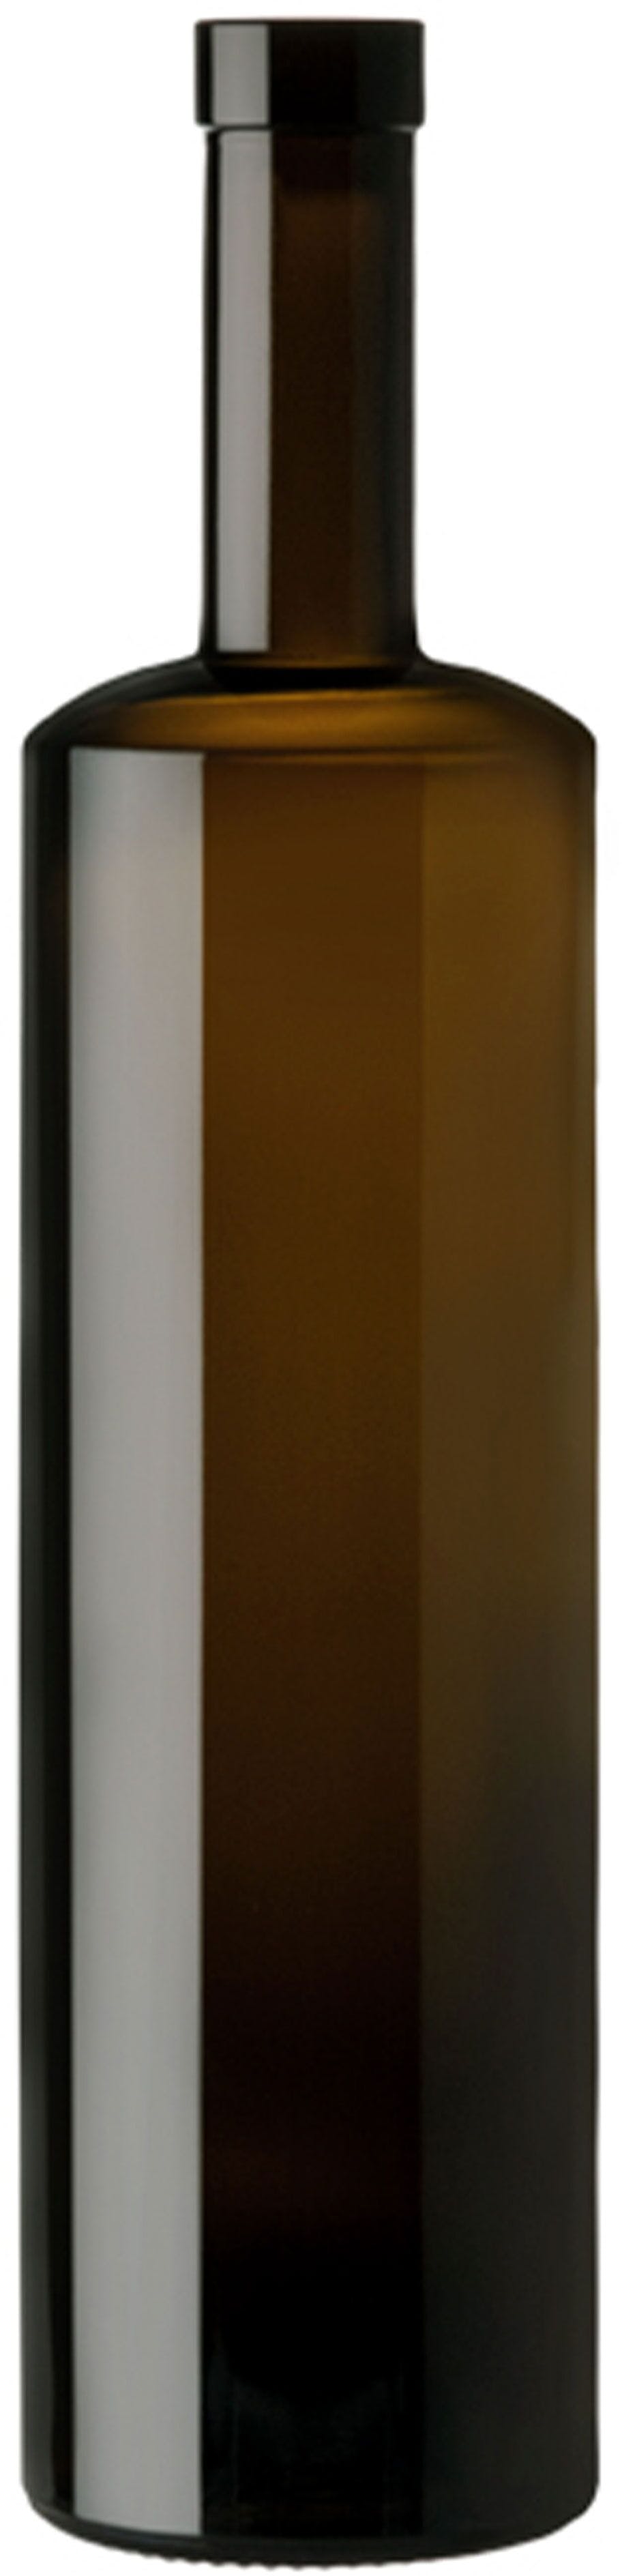 Flasche KIRA  WINE 750 ml BG-Korken